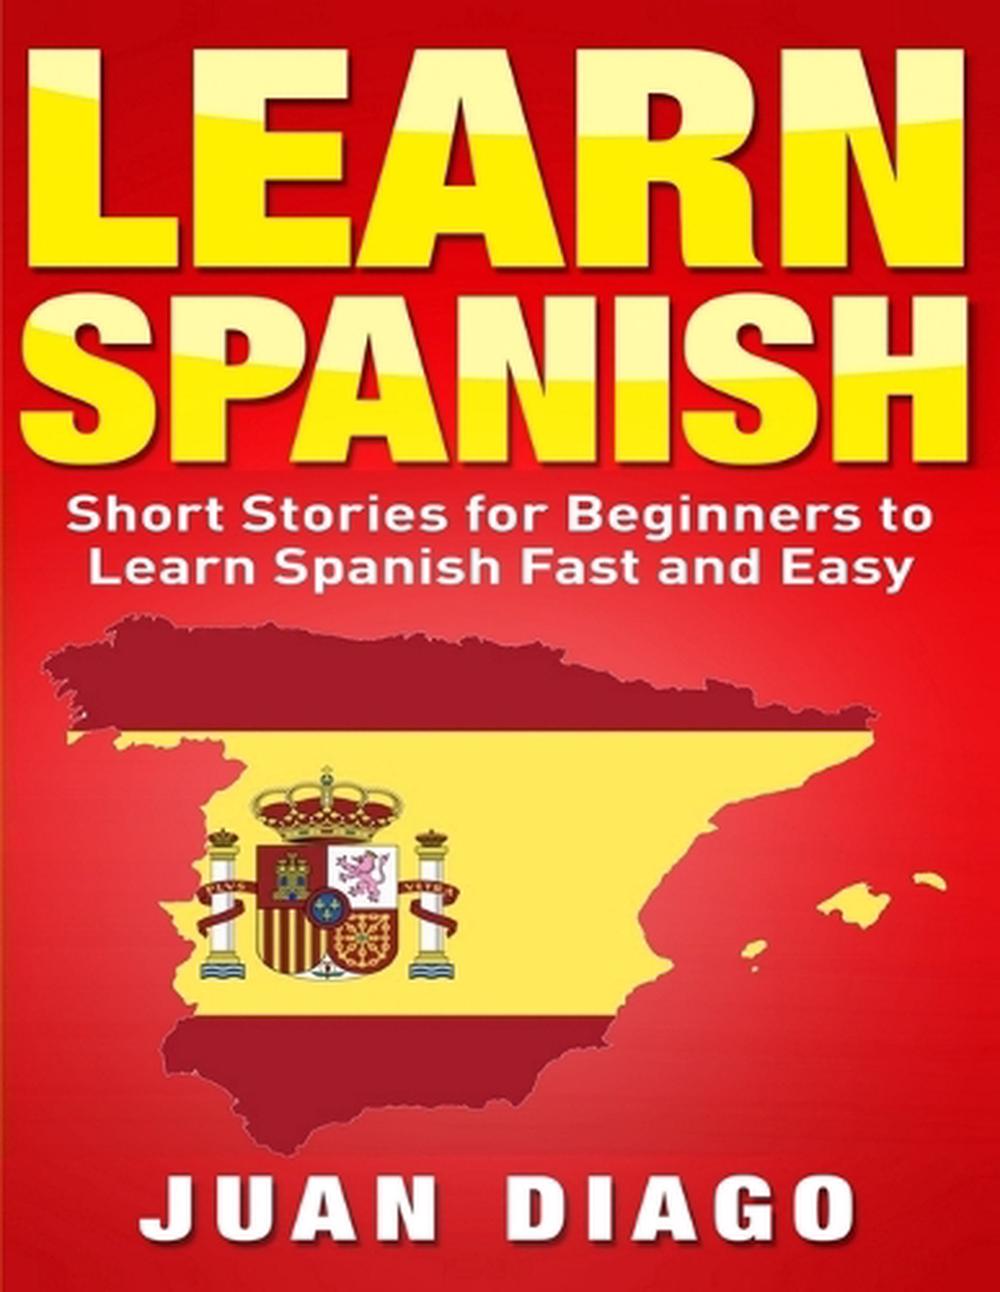 learn spanish online